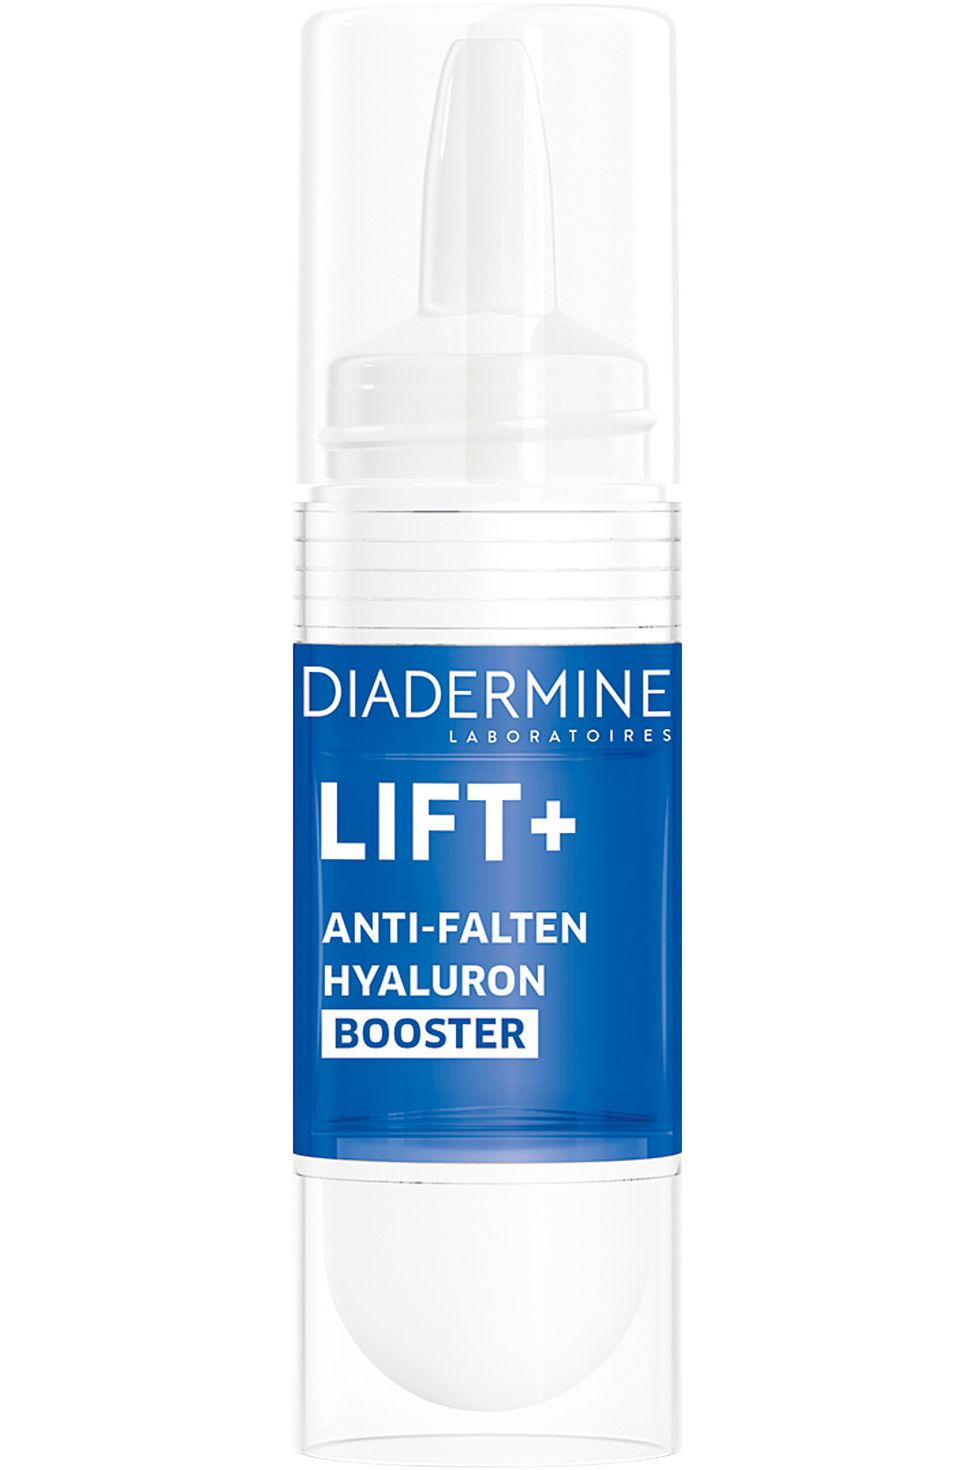 Diadermine Lift+ Anti-Falten Hyaluron Booster